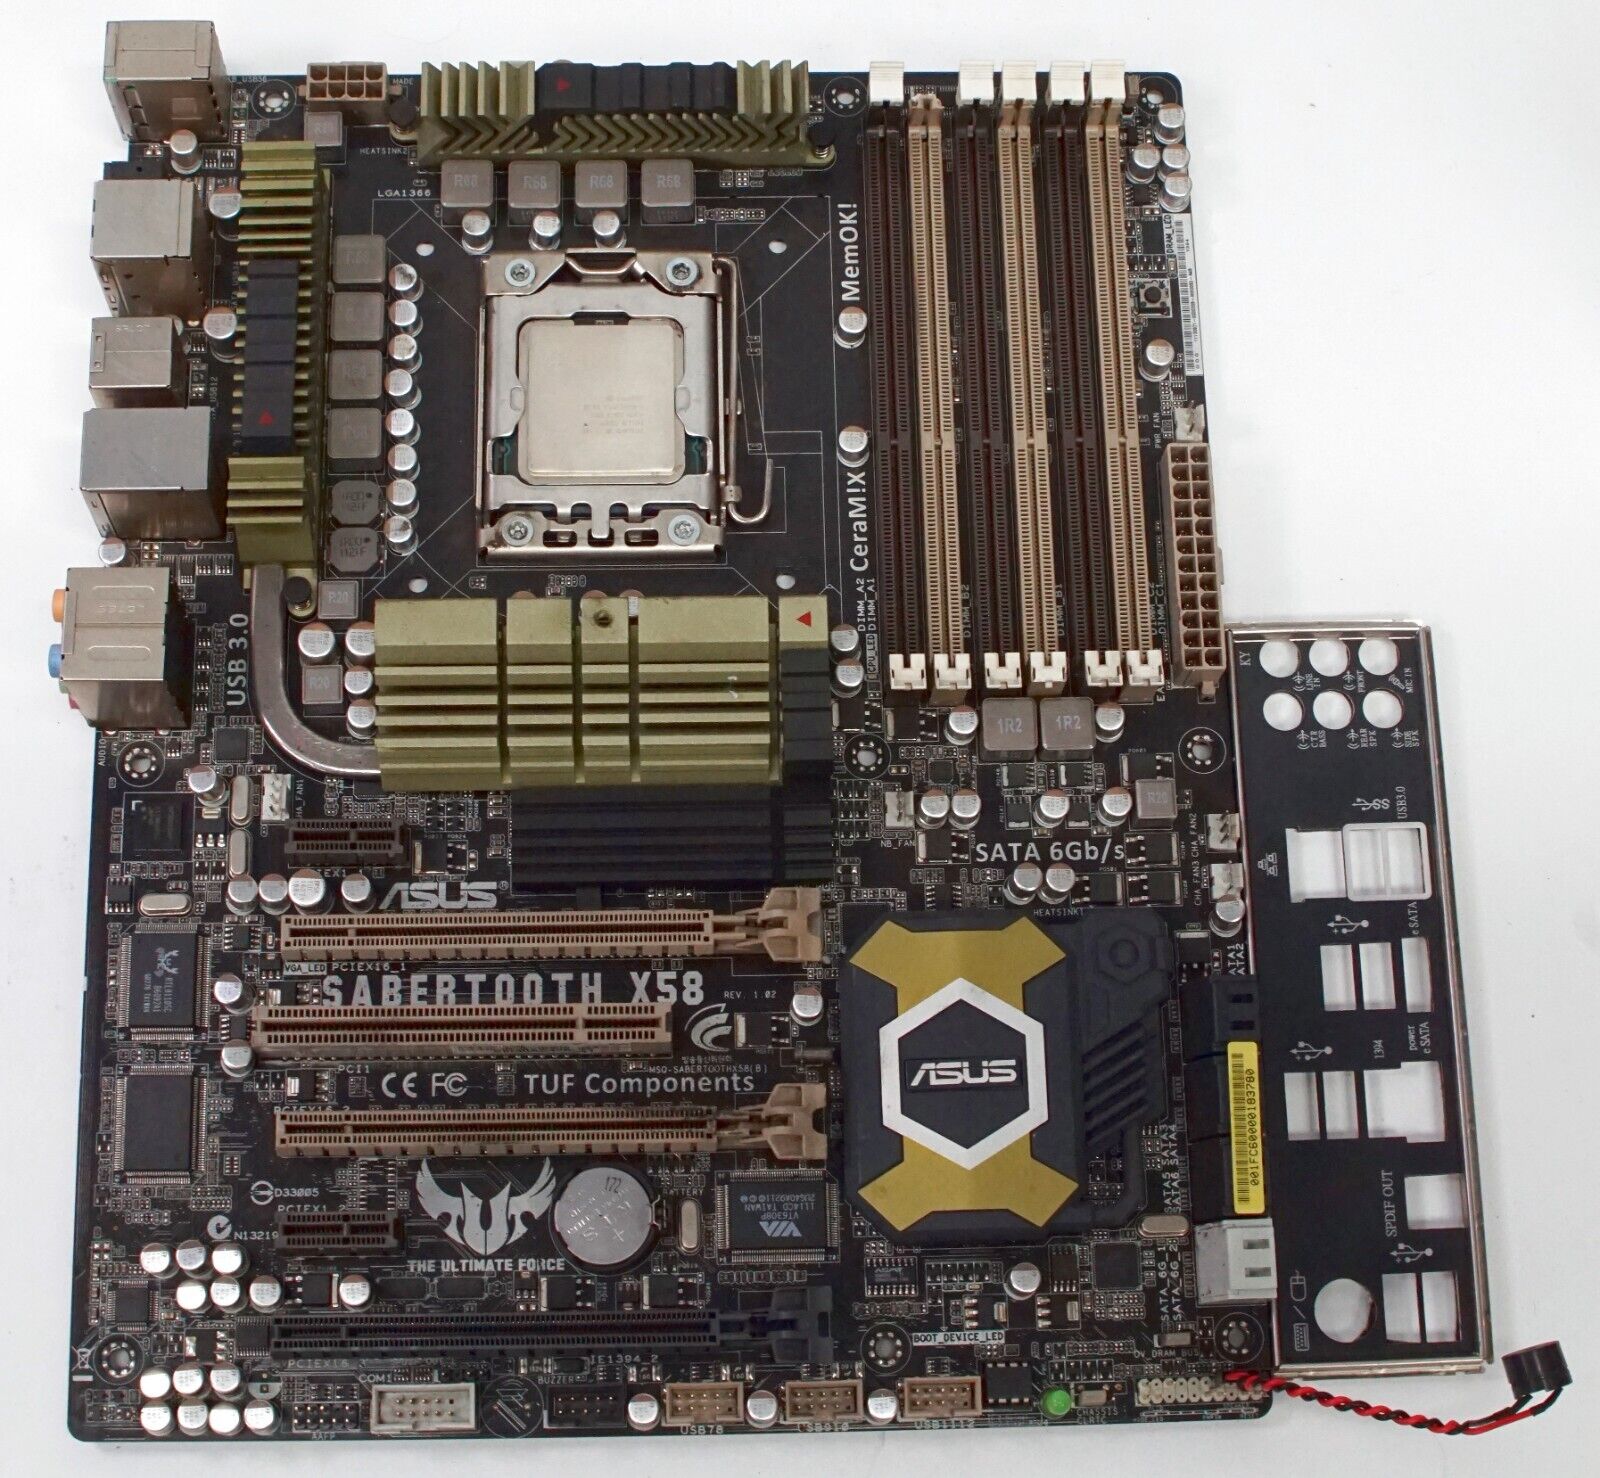 ASUS SABERTOOTH X58 ATX Intel LGA1366 DDR3 Motherboard w/i7-950 CPU & IO Shield